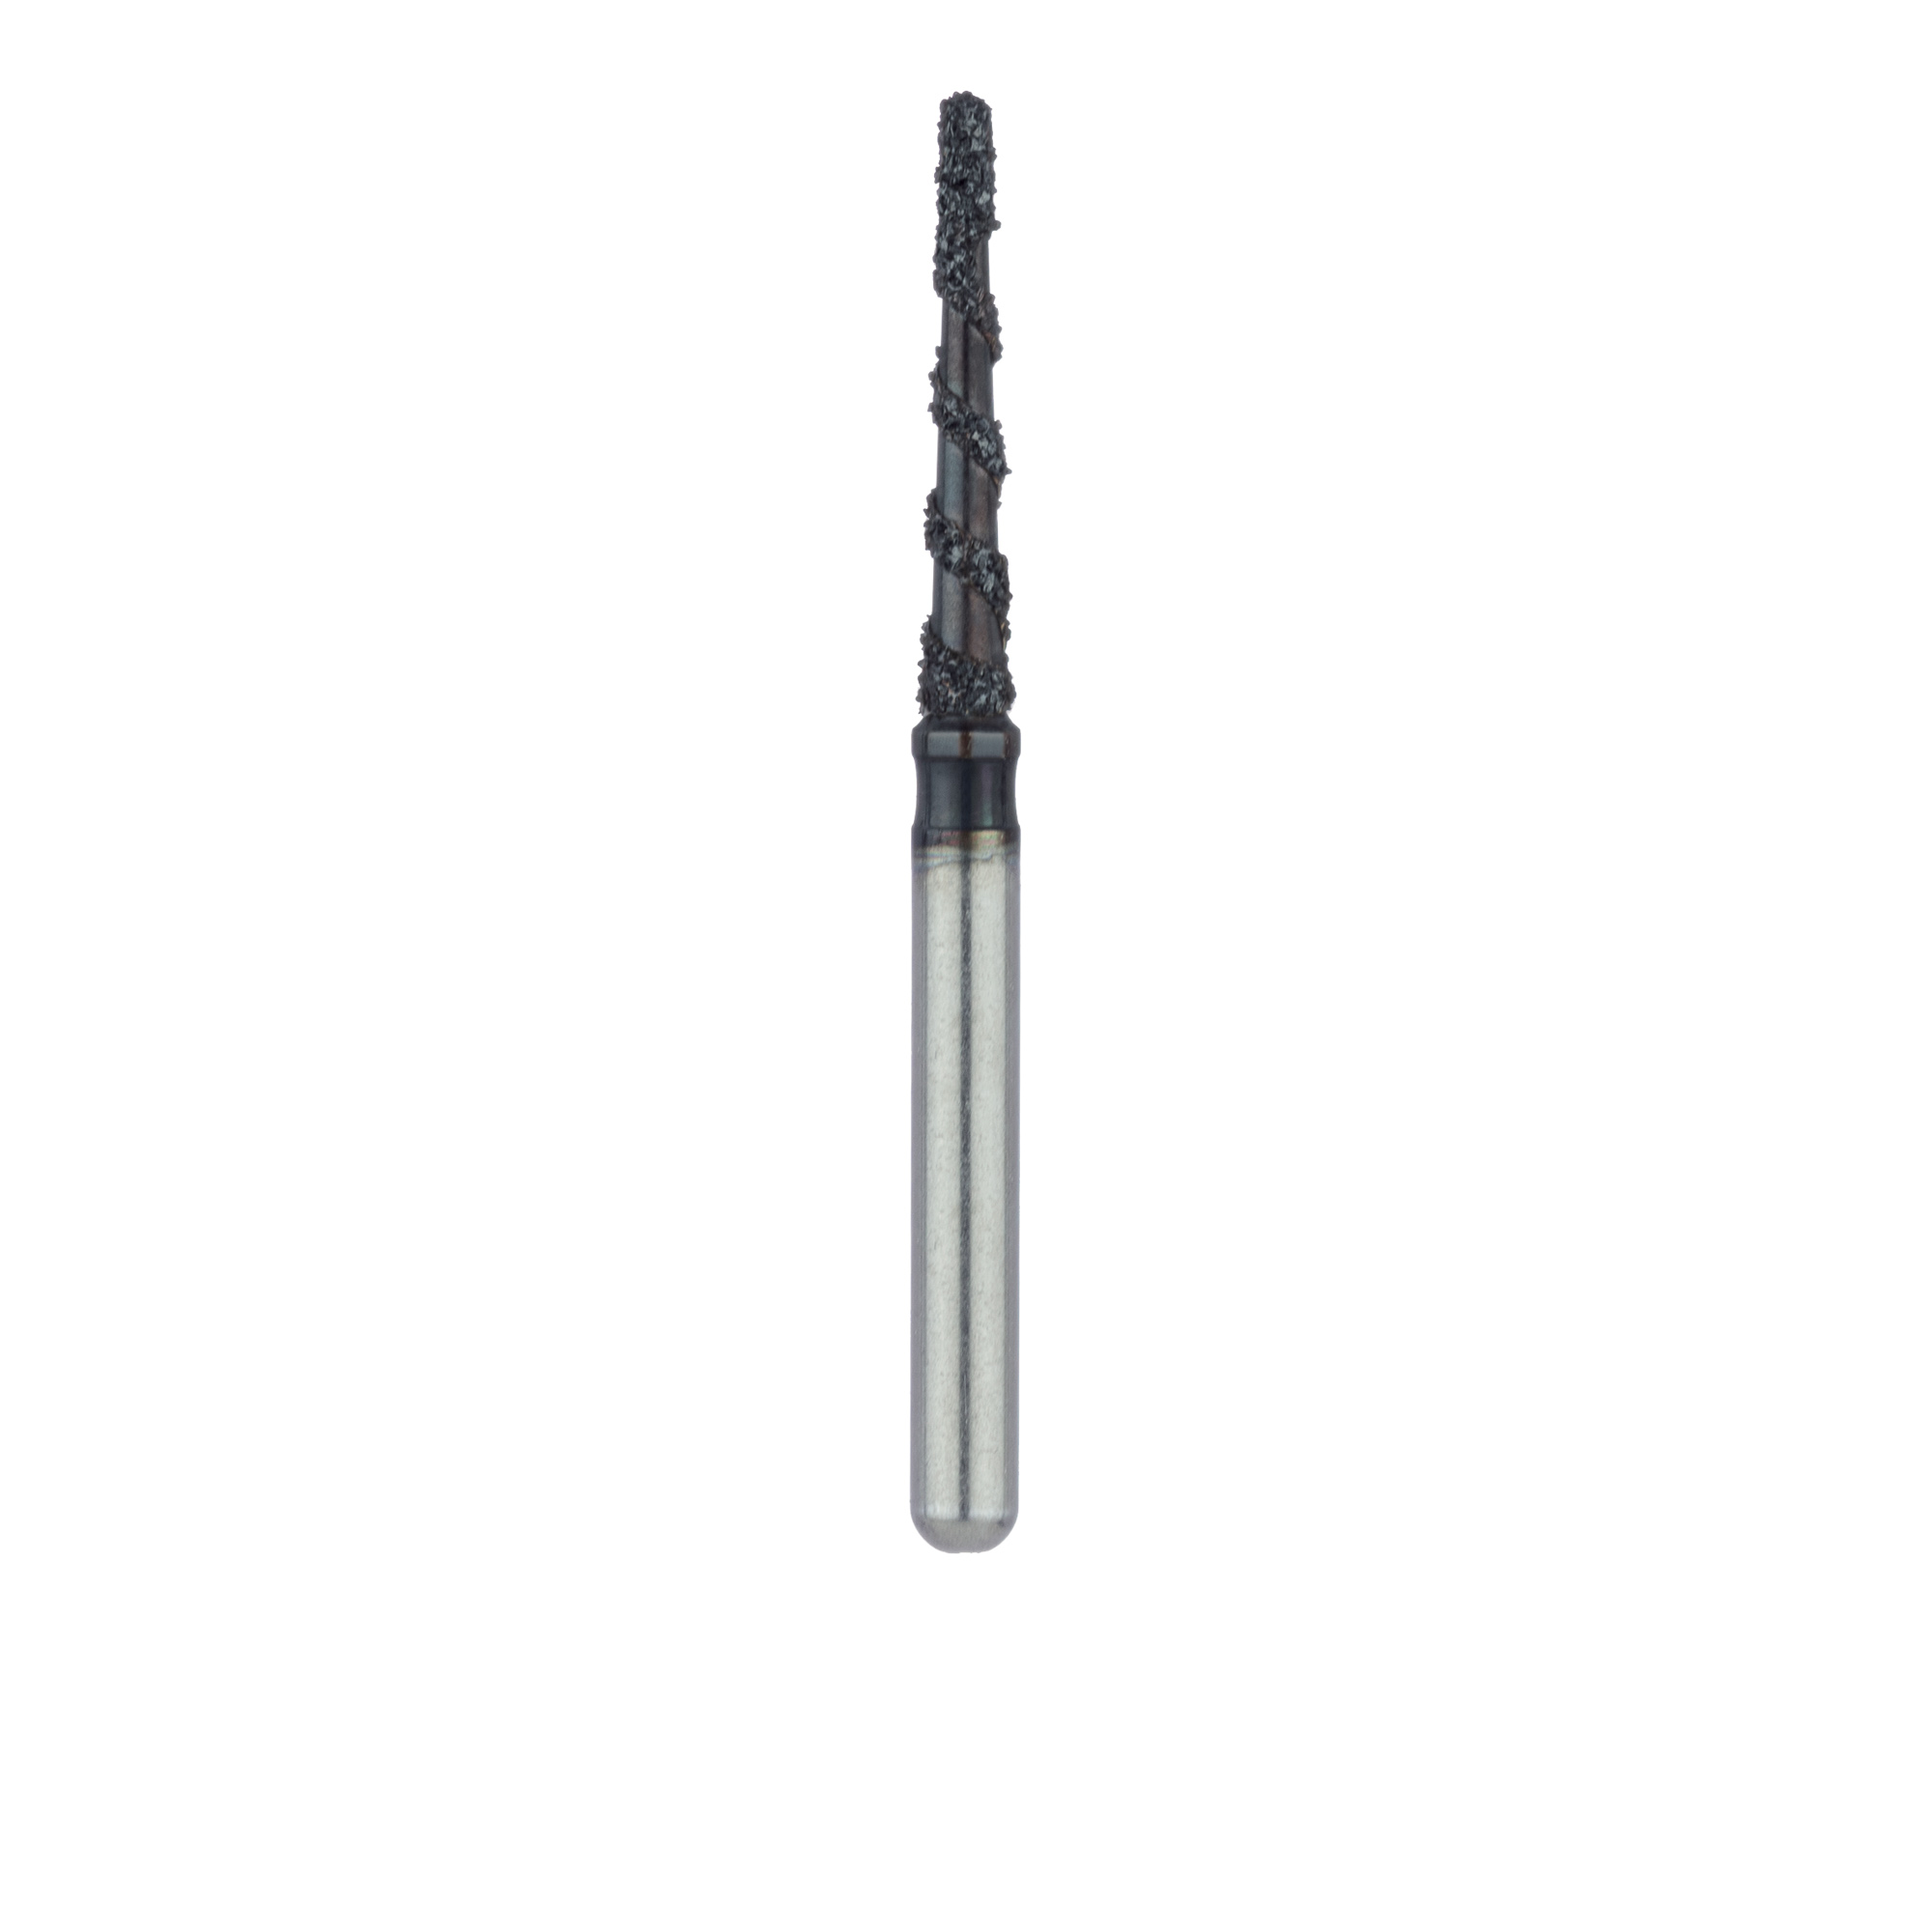 B850-014-FG Black Cobra Diamond Bur, Round End Taper, 1.4mm Ø, Super Coarse, FG